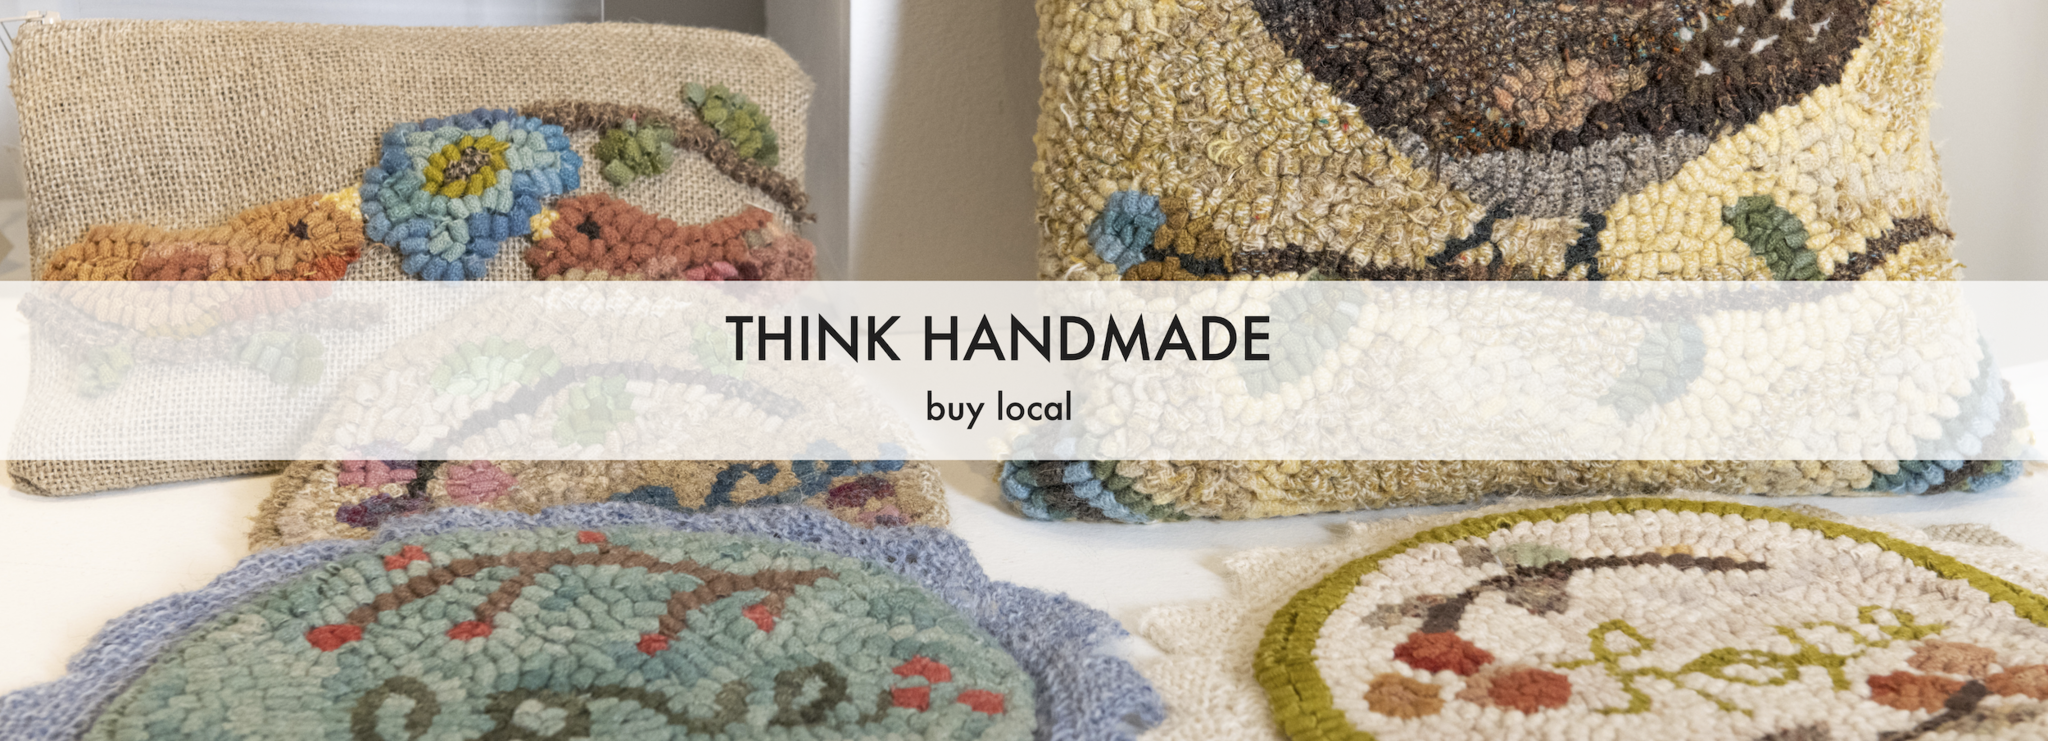 Think handmade 5 